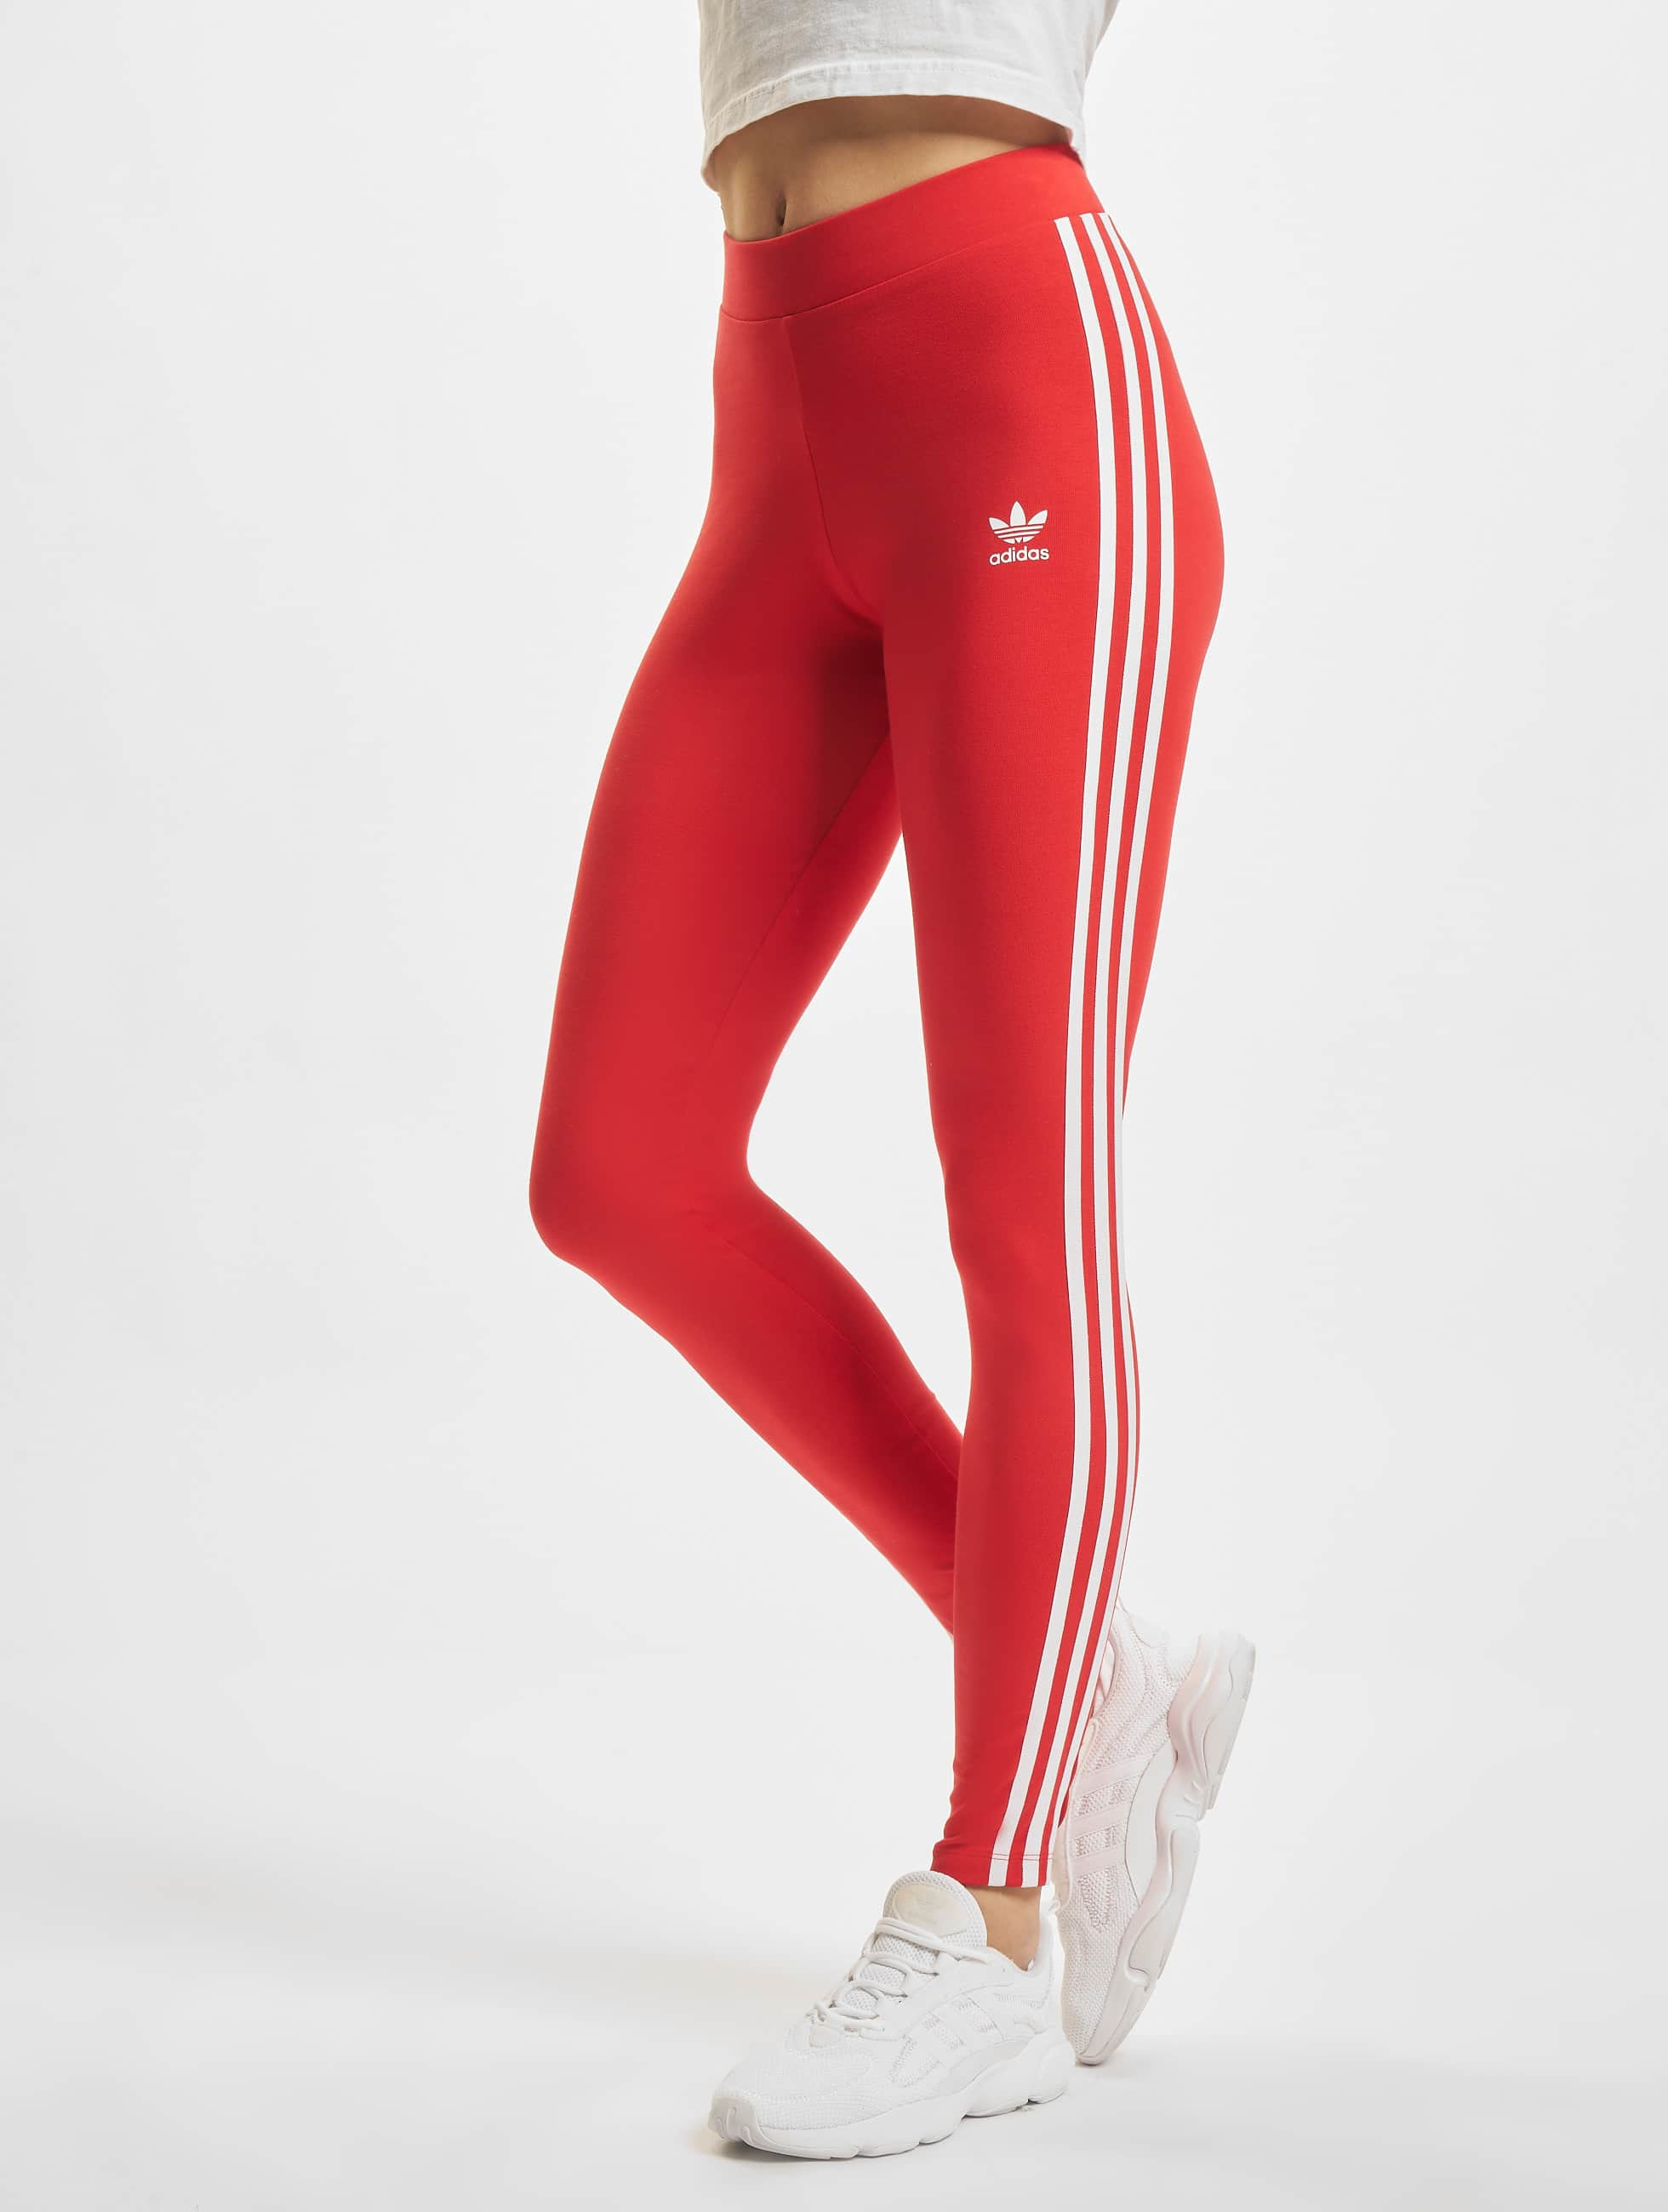 smaak Kleren Perth adidas Originals broek / Legging 3 Stripes in rood 867679